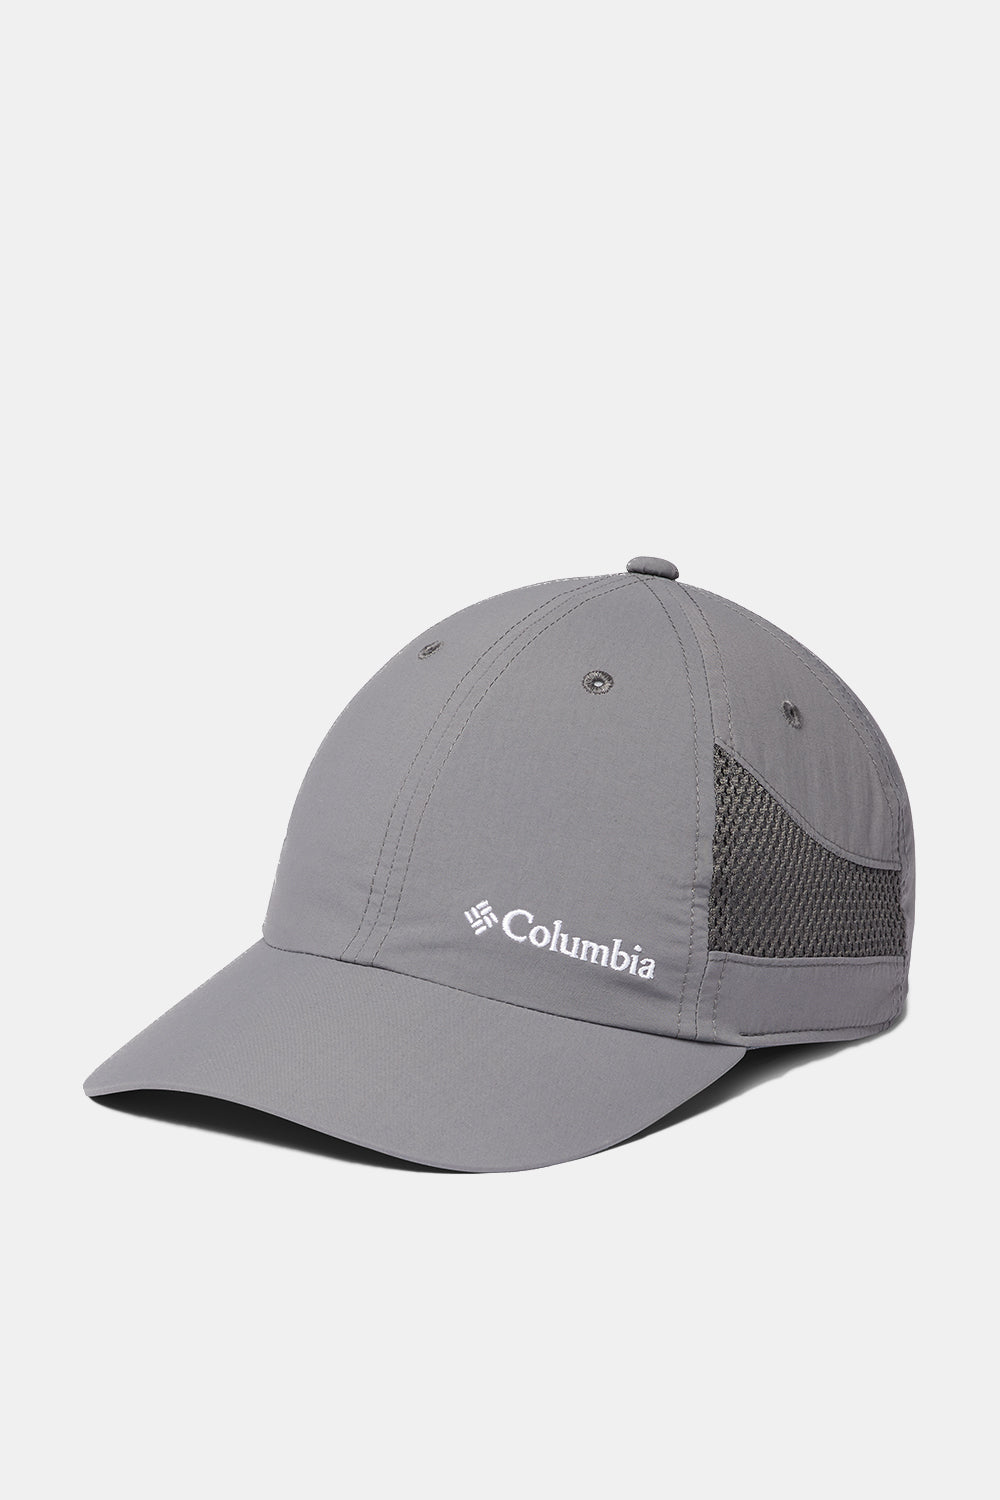 Columbia Tech ShadeTM Hat (City Grey)